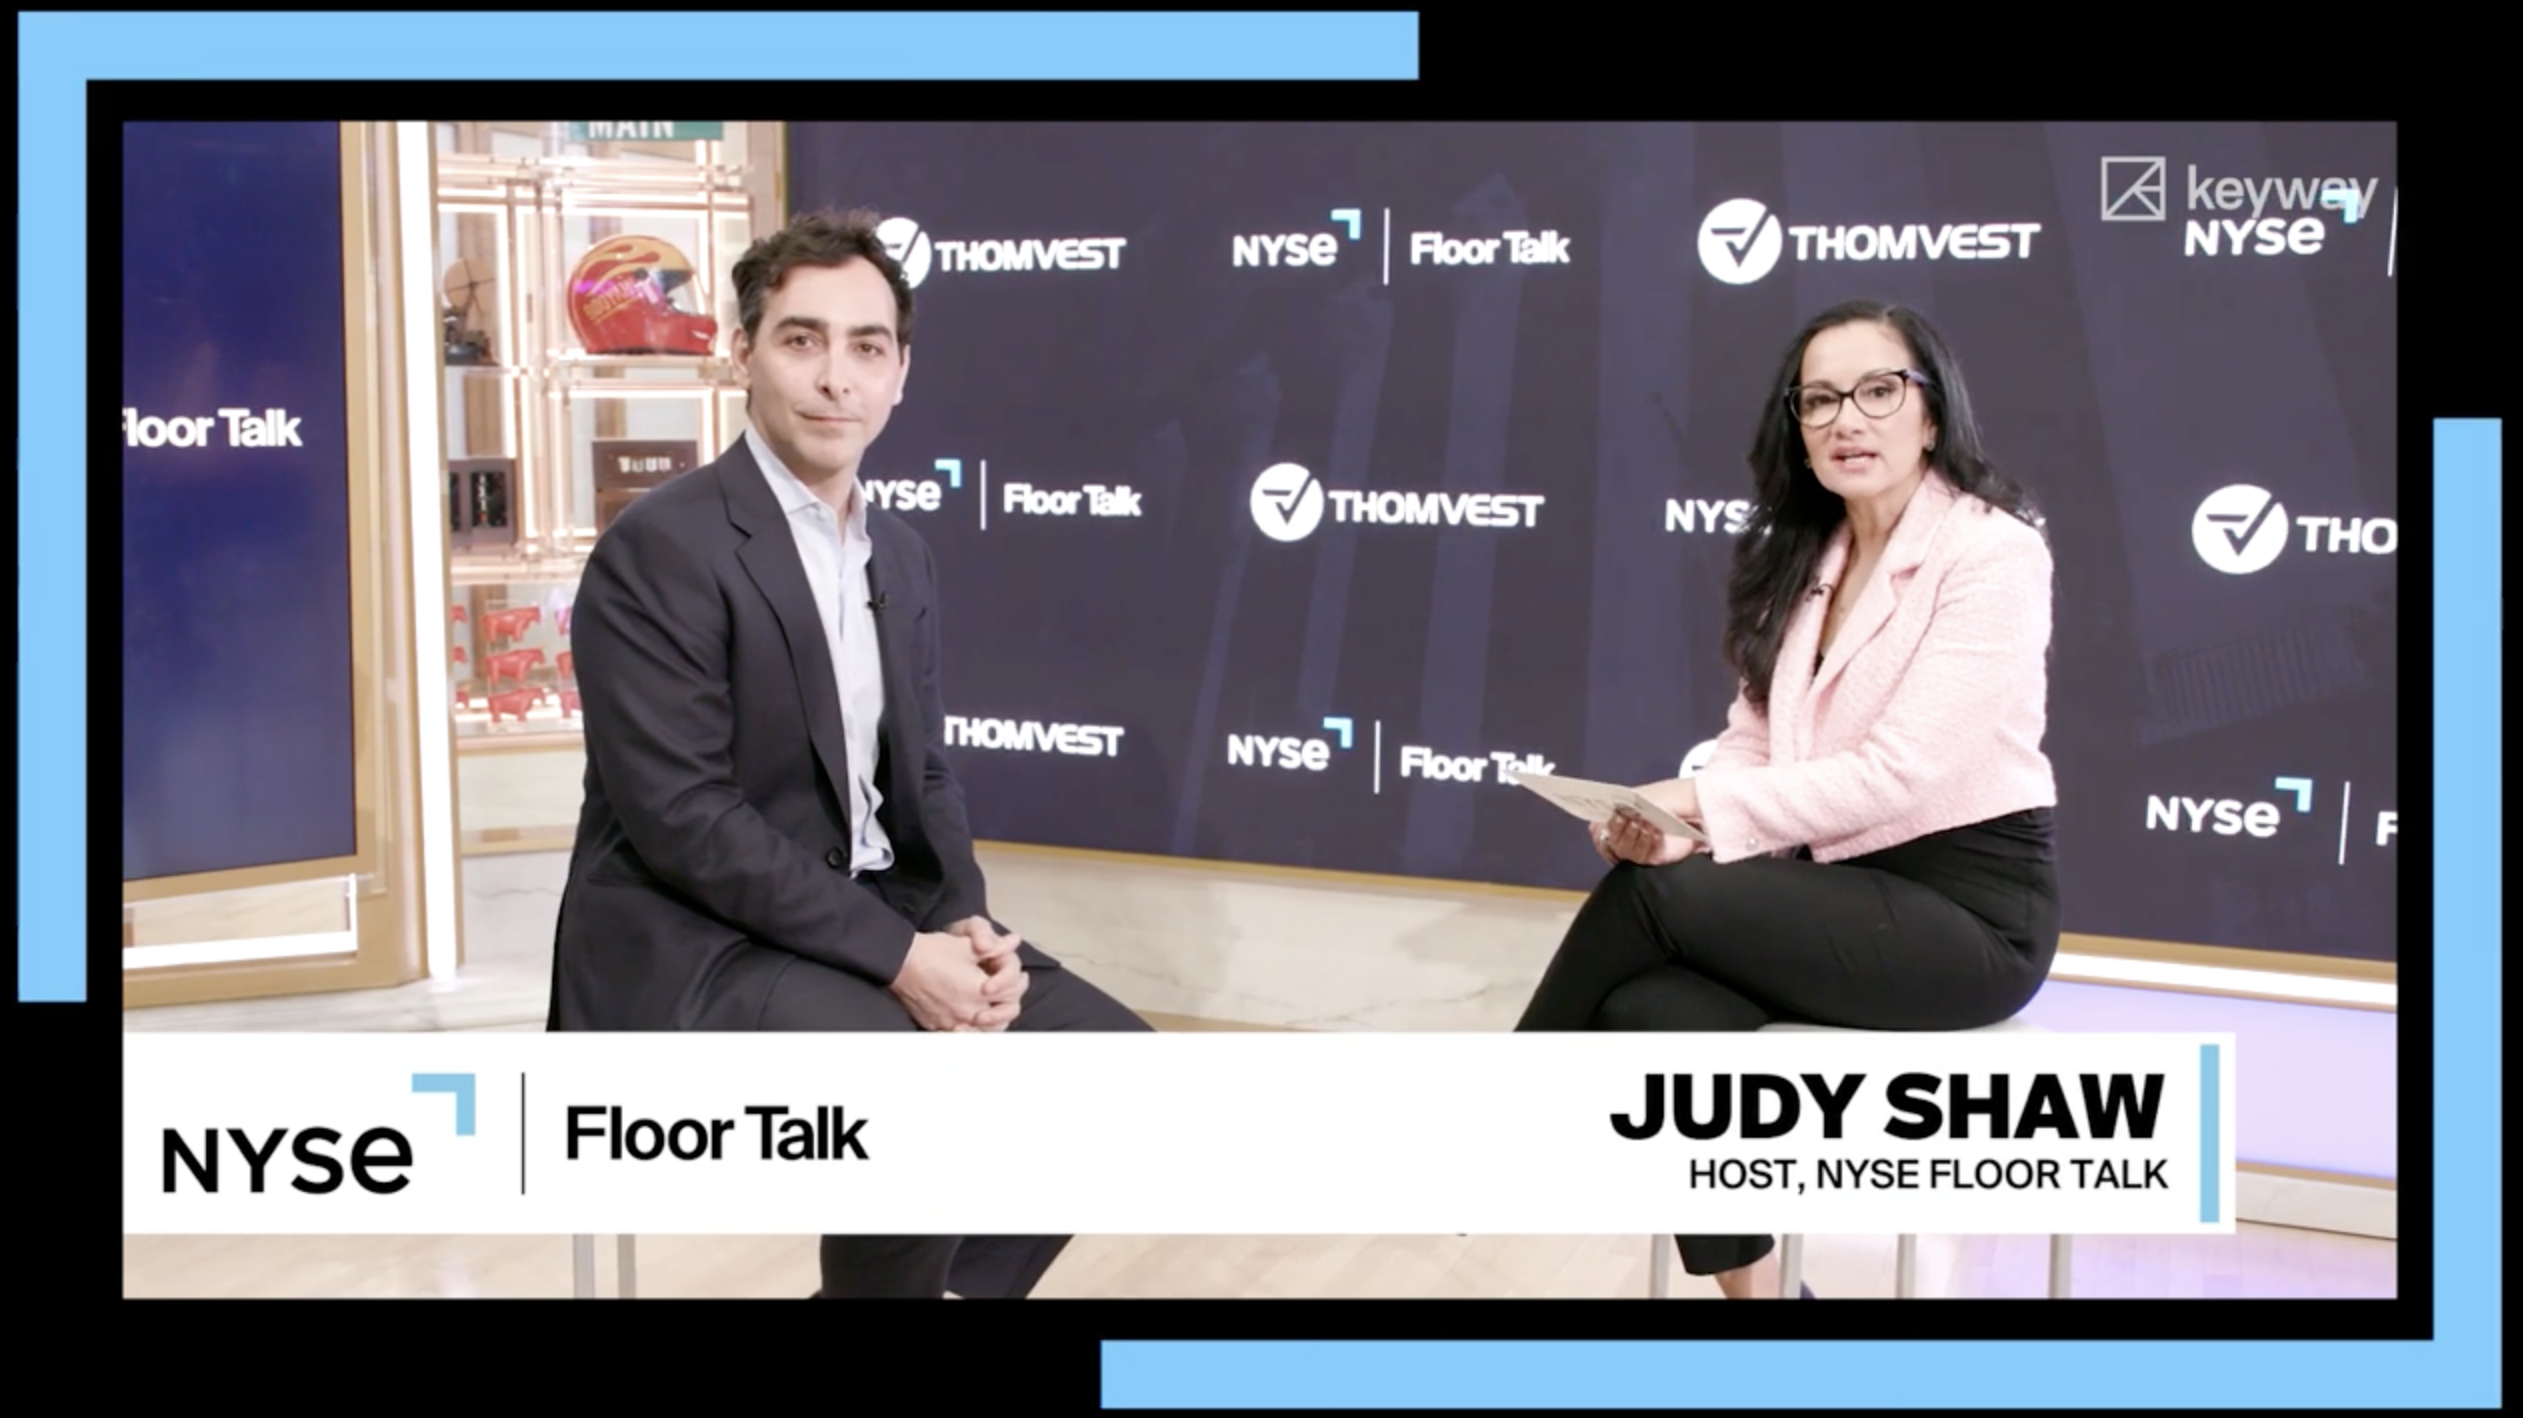 Matias Recchia’s Appearance on NYSE Floor Talk 